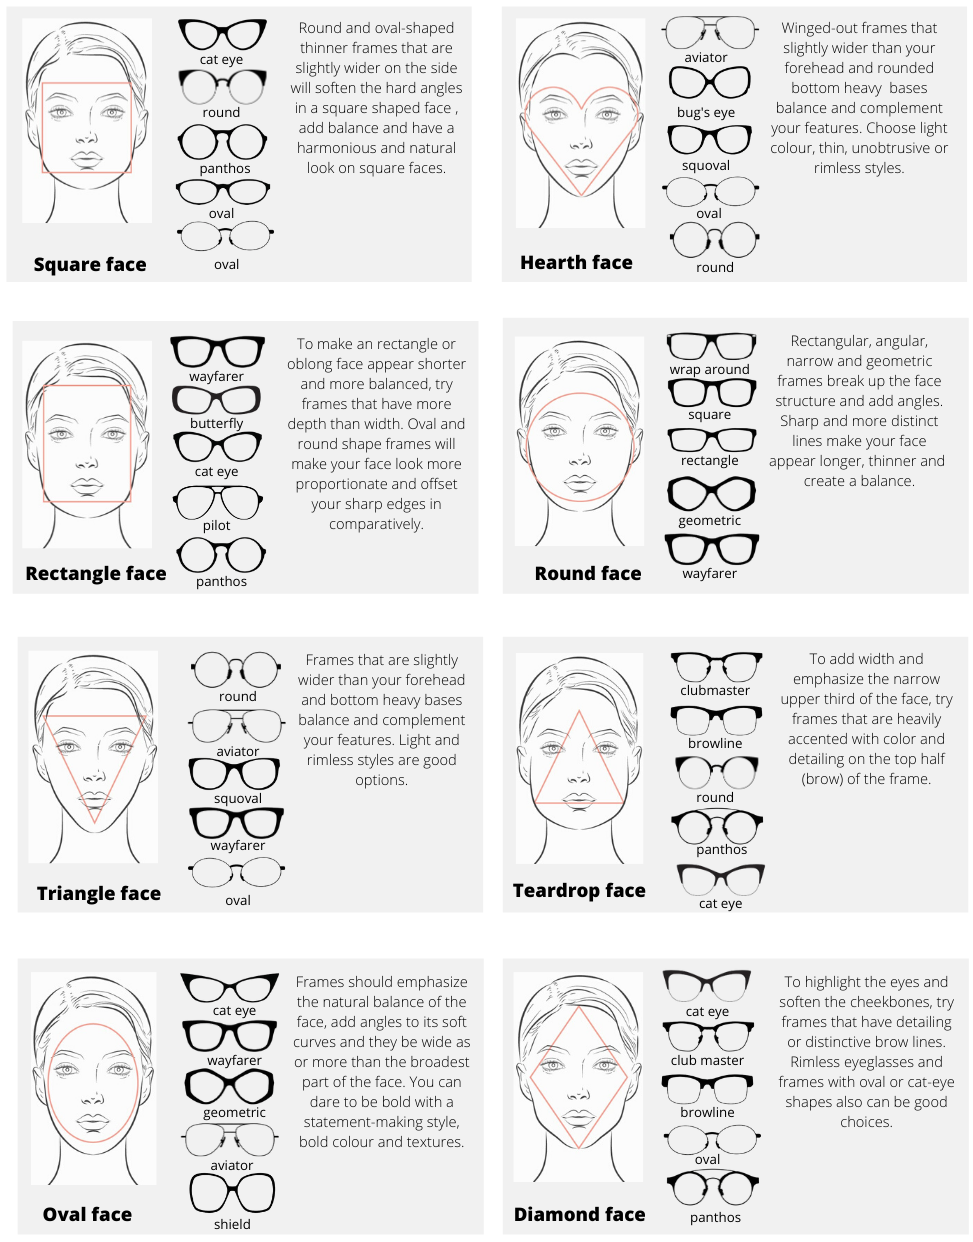 Frames for your face shape